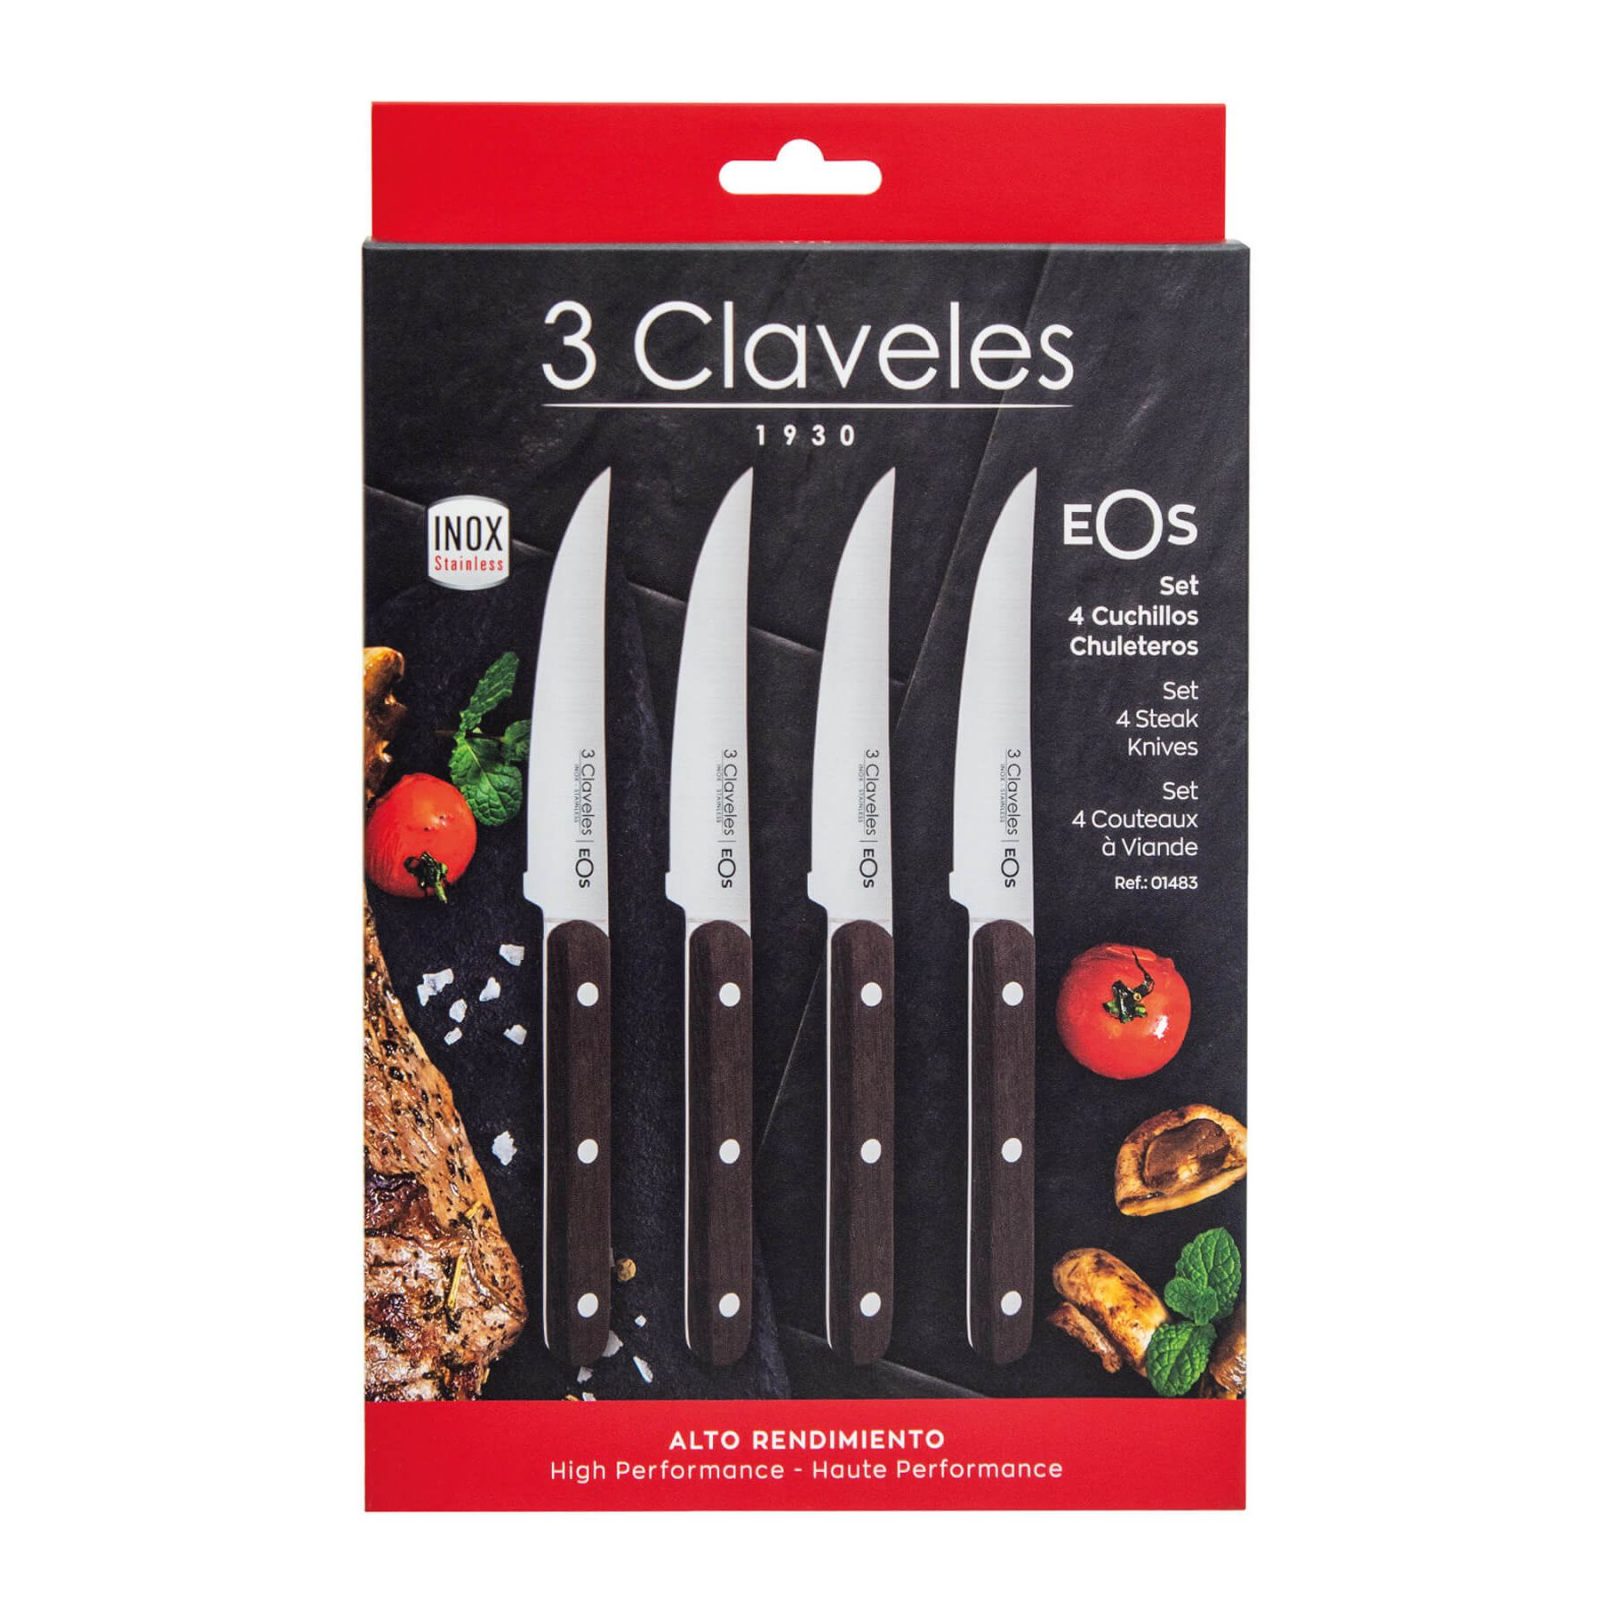 Set de 4 cuchillos chuleteros de filo dentado - 3 Claveles Kobe 1046